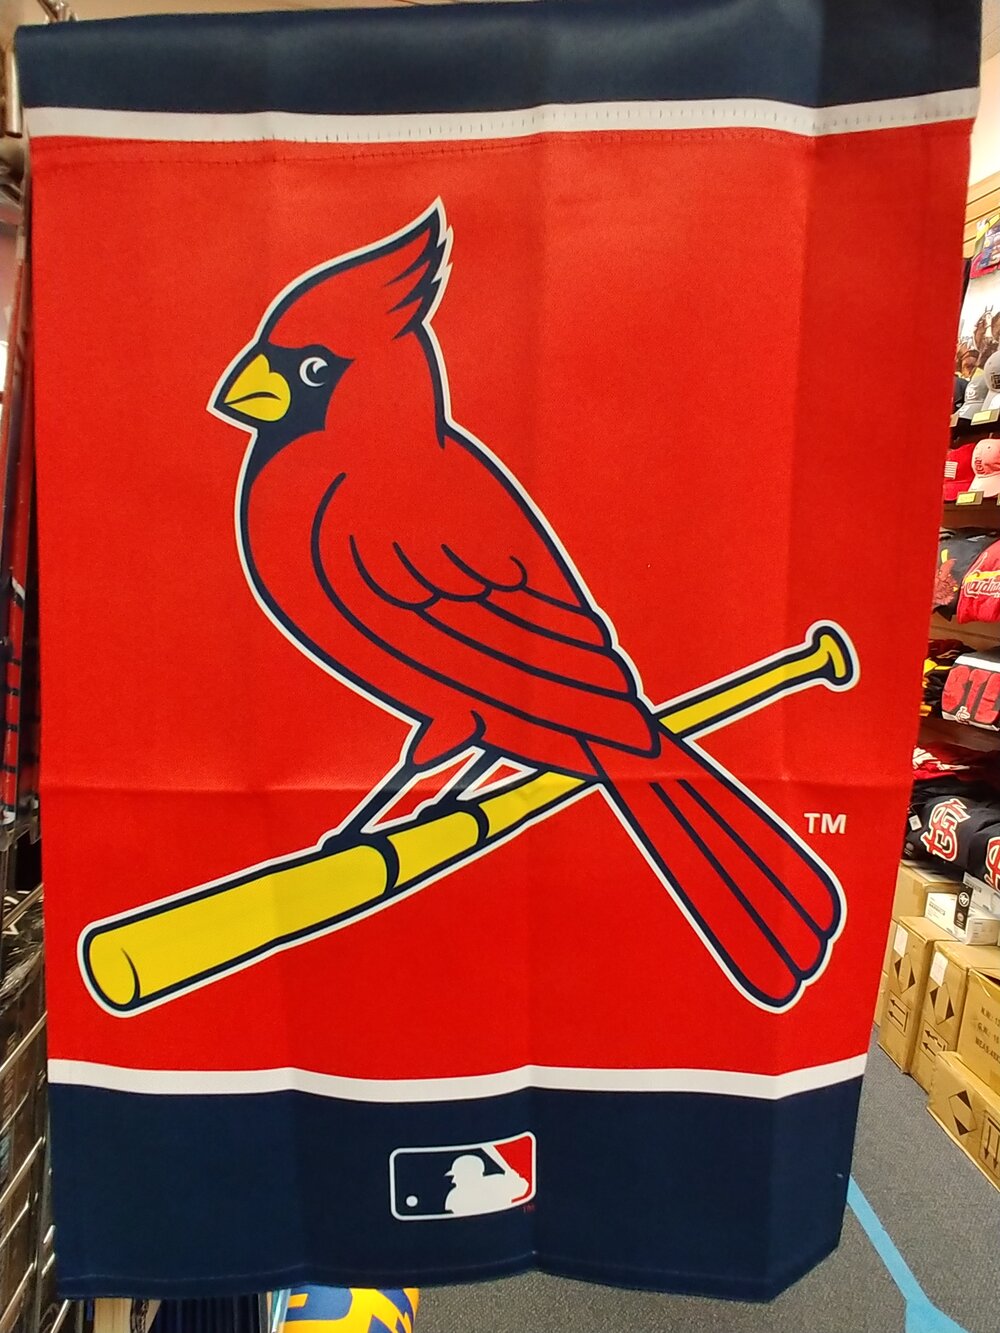 WinCraft St. Louis Cardinals Double Sided Garden Flag